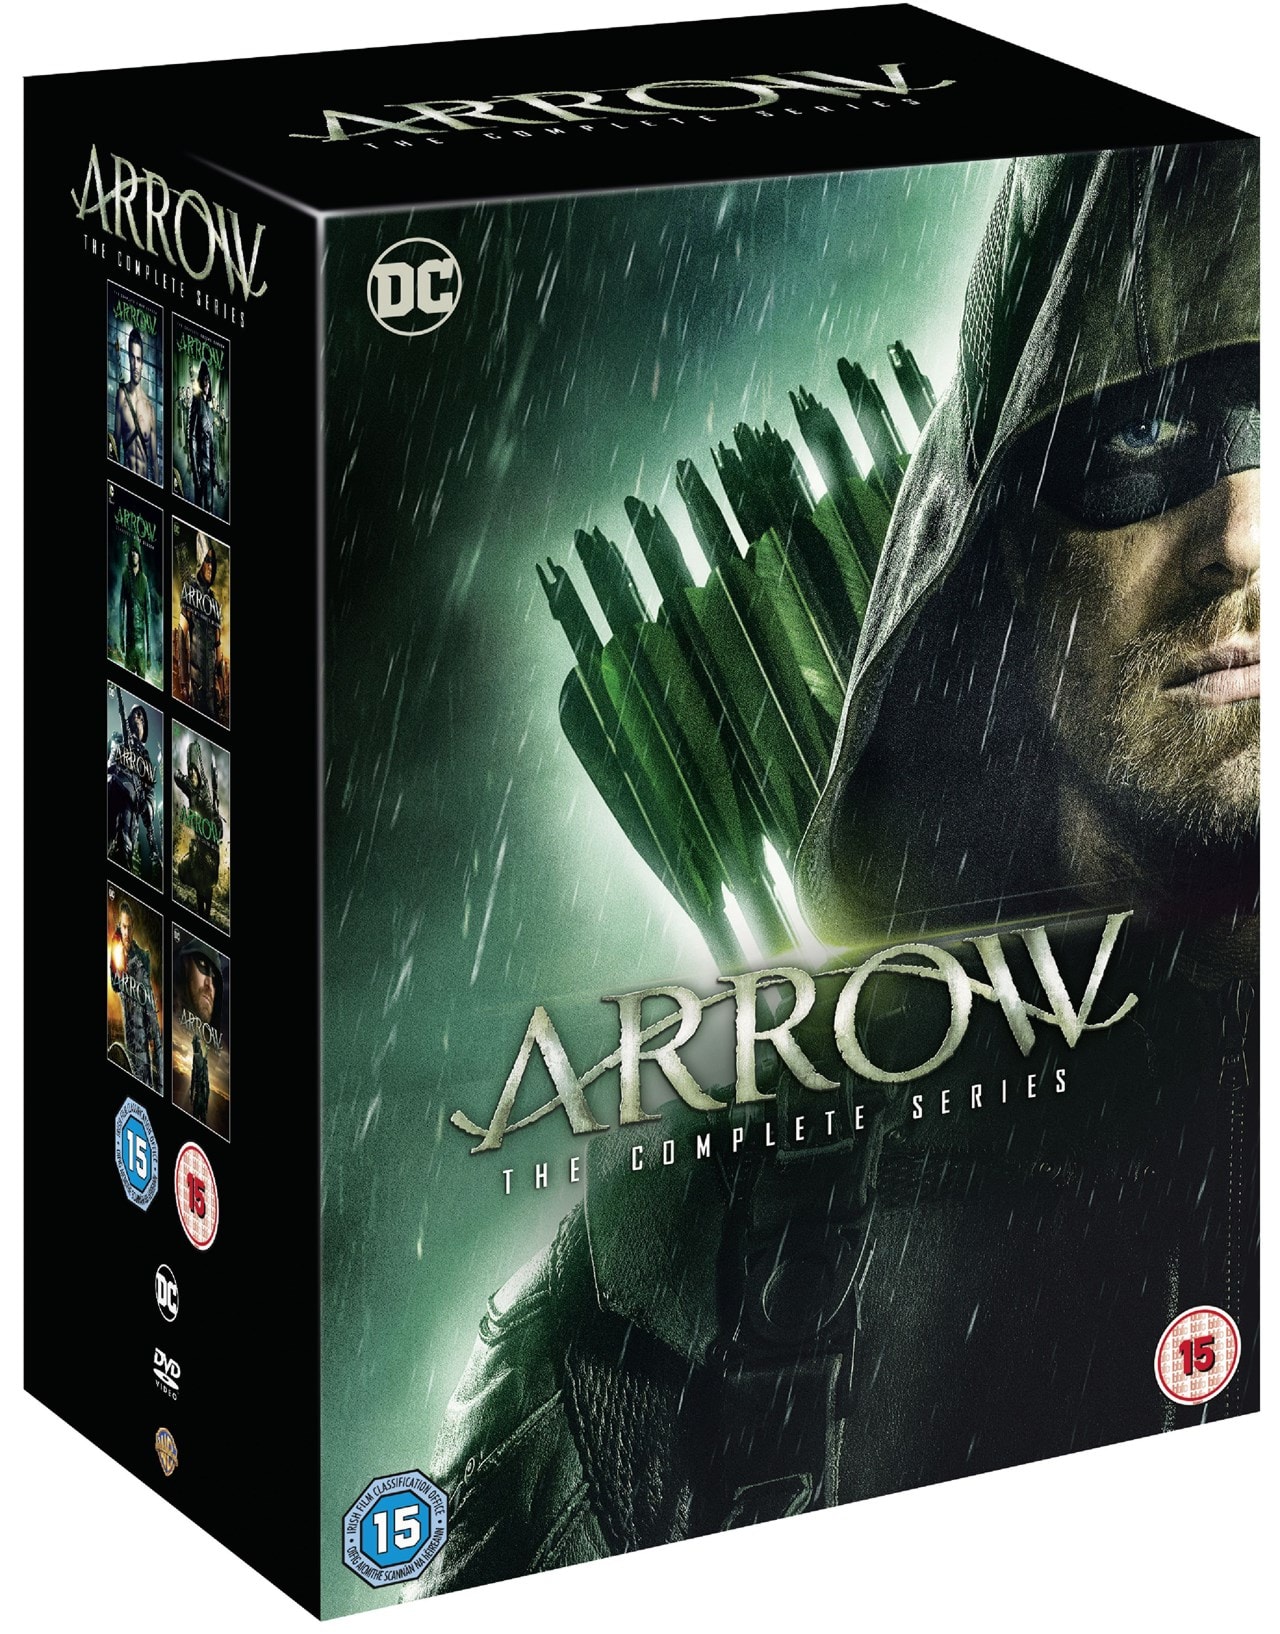 arrow english season 1 episodes download zip